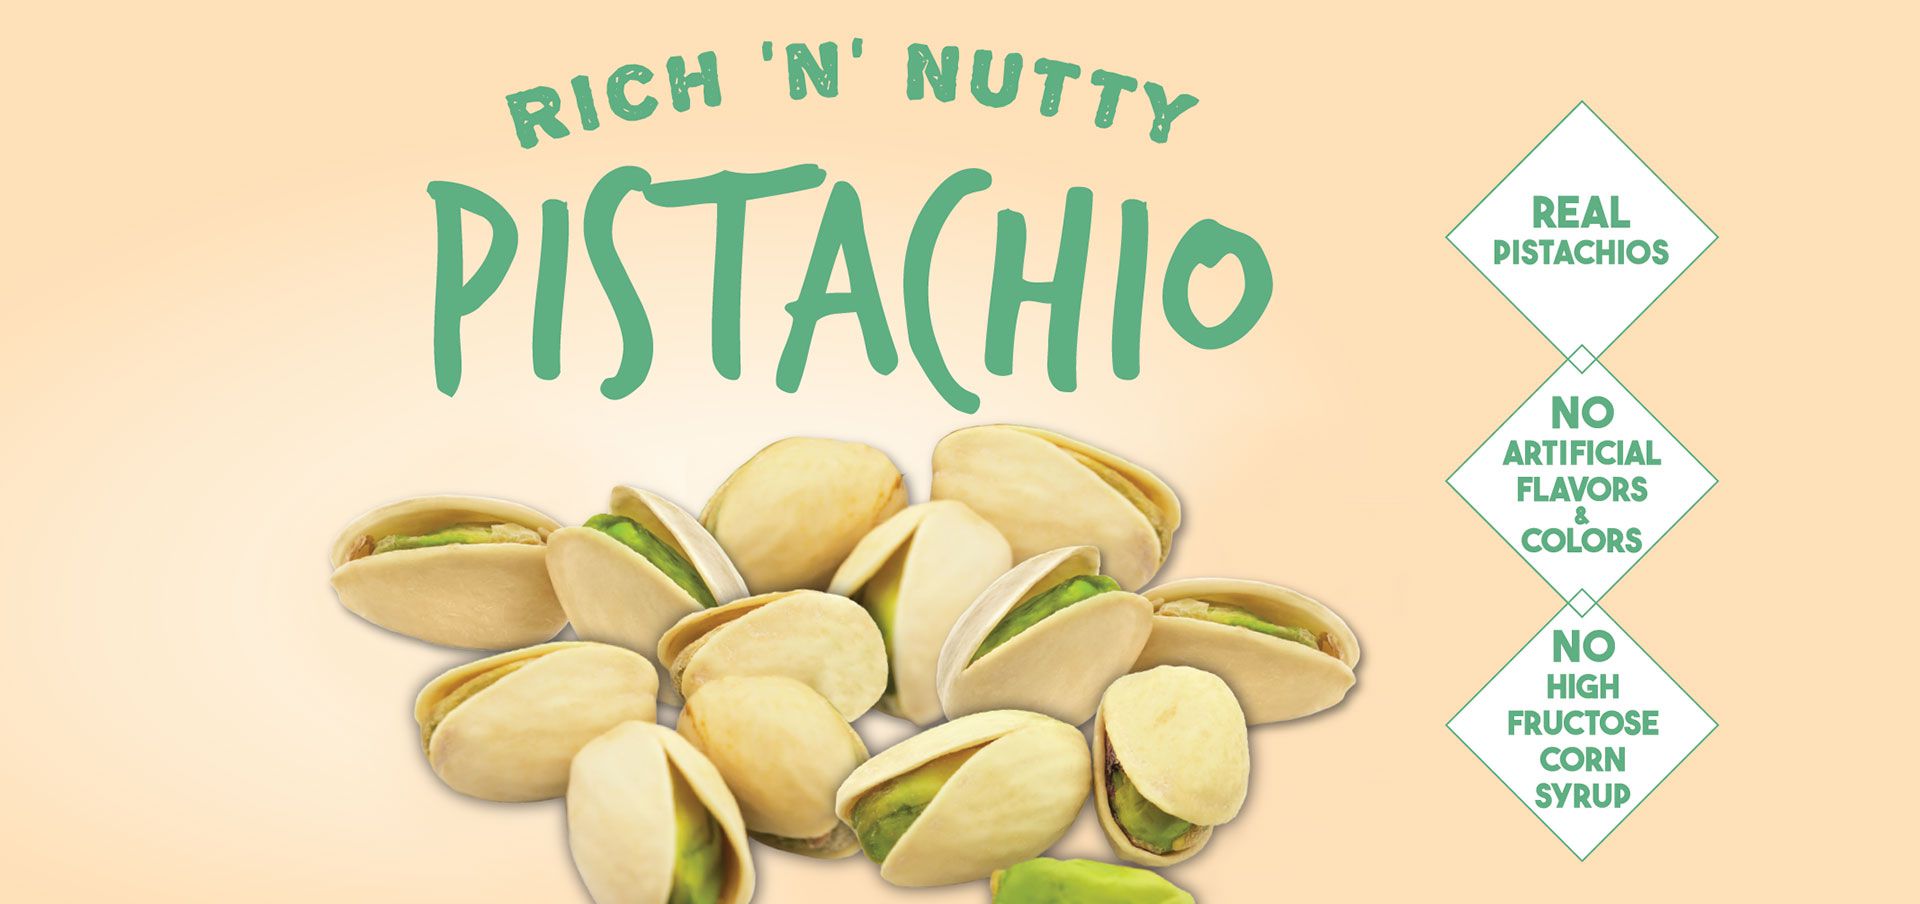 rich 'n' nutty pistachio label image